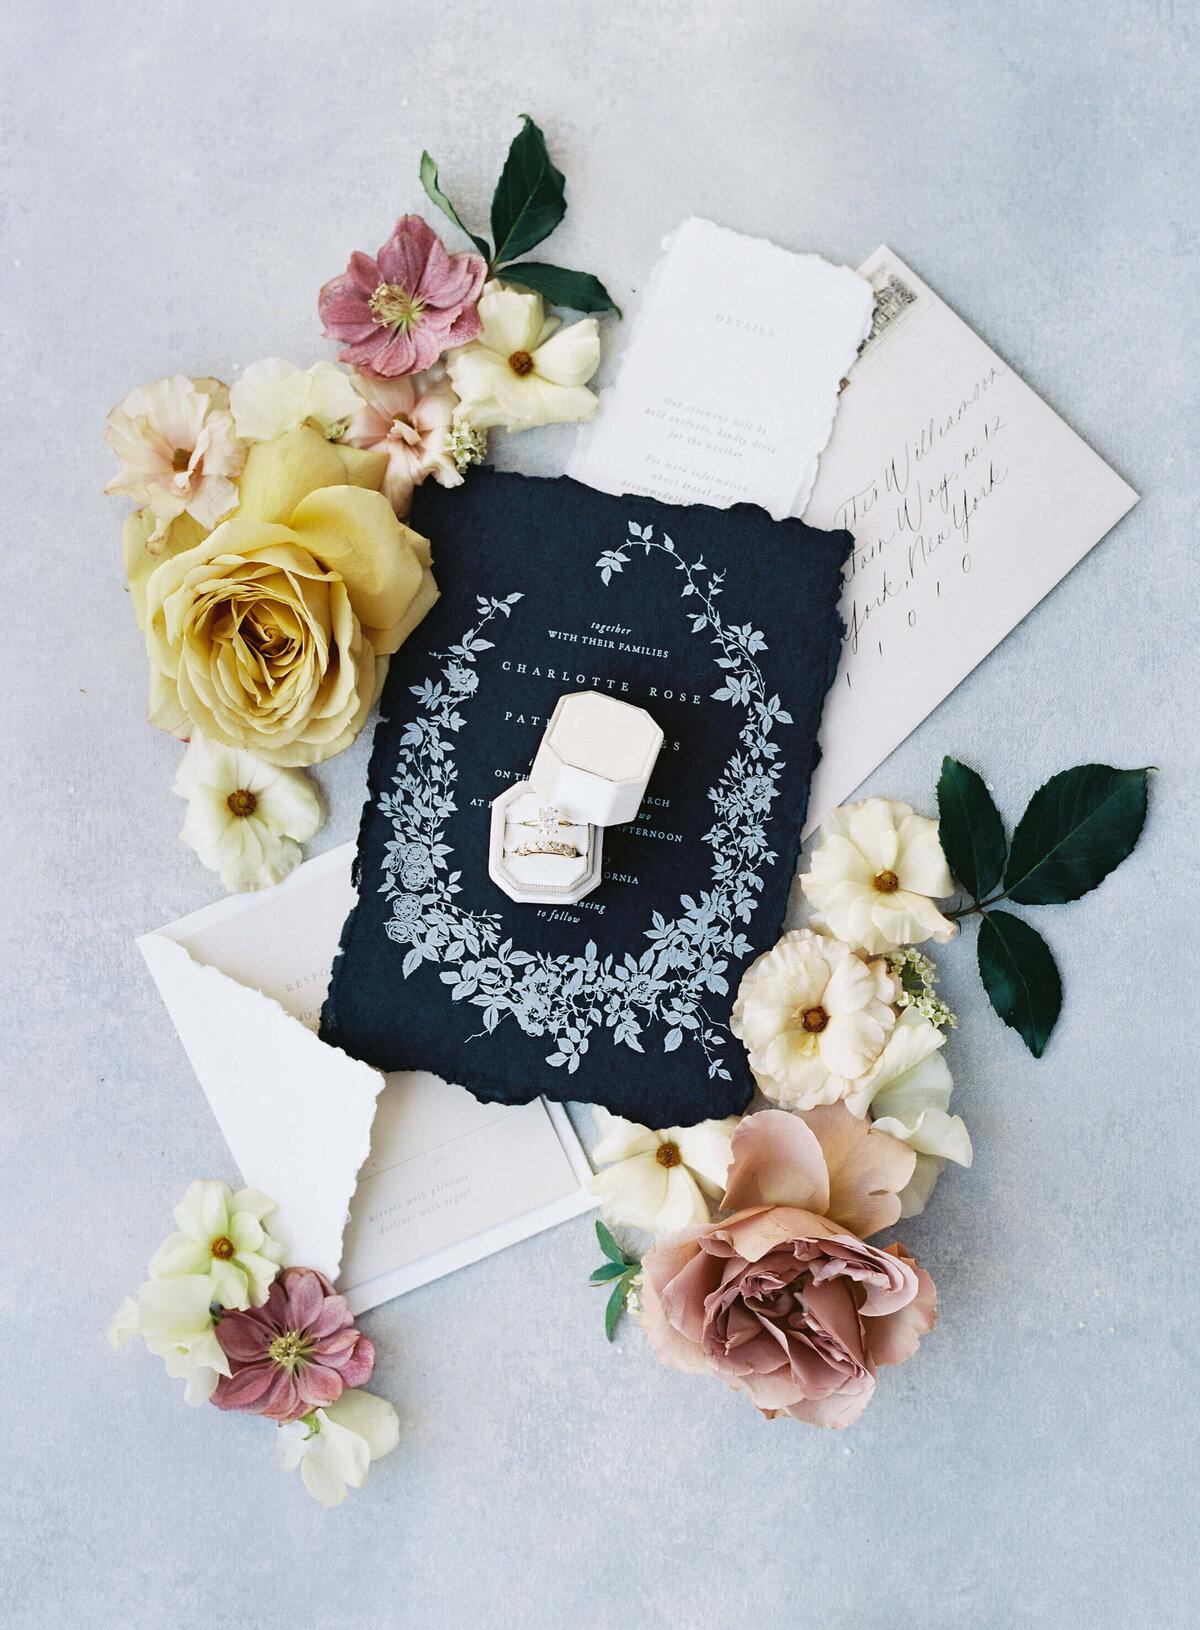 Sunstone-Winery- Destination Wedding Florist - Luxury Wedding Flowers - Autumn Marcelle Design (235)